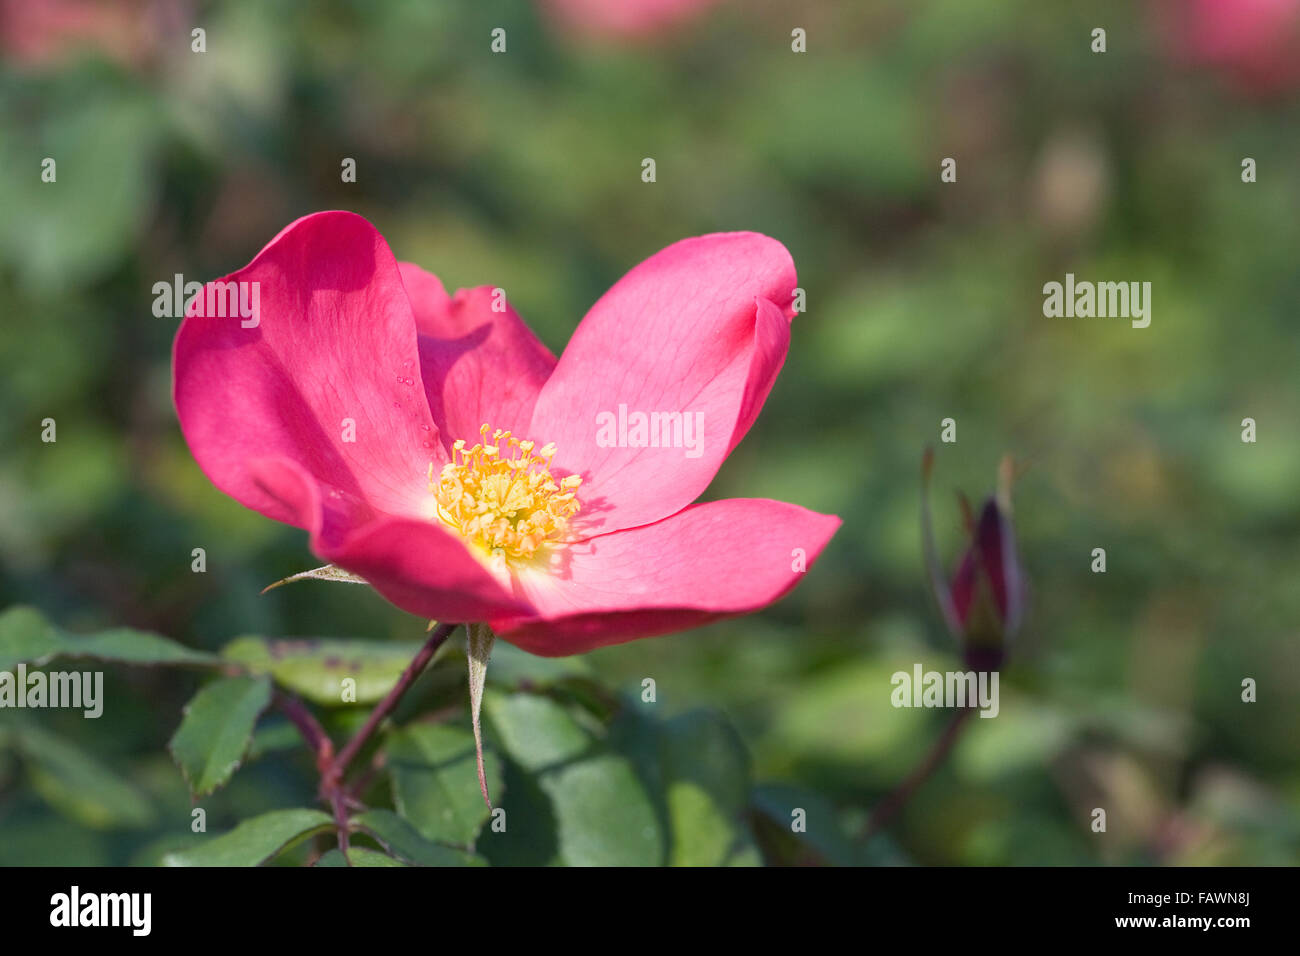 Rosa. Rose di Piccardia 'Ausfudge' Fiore Foto stock - Alamy